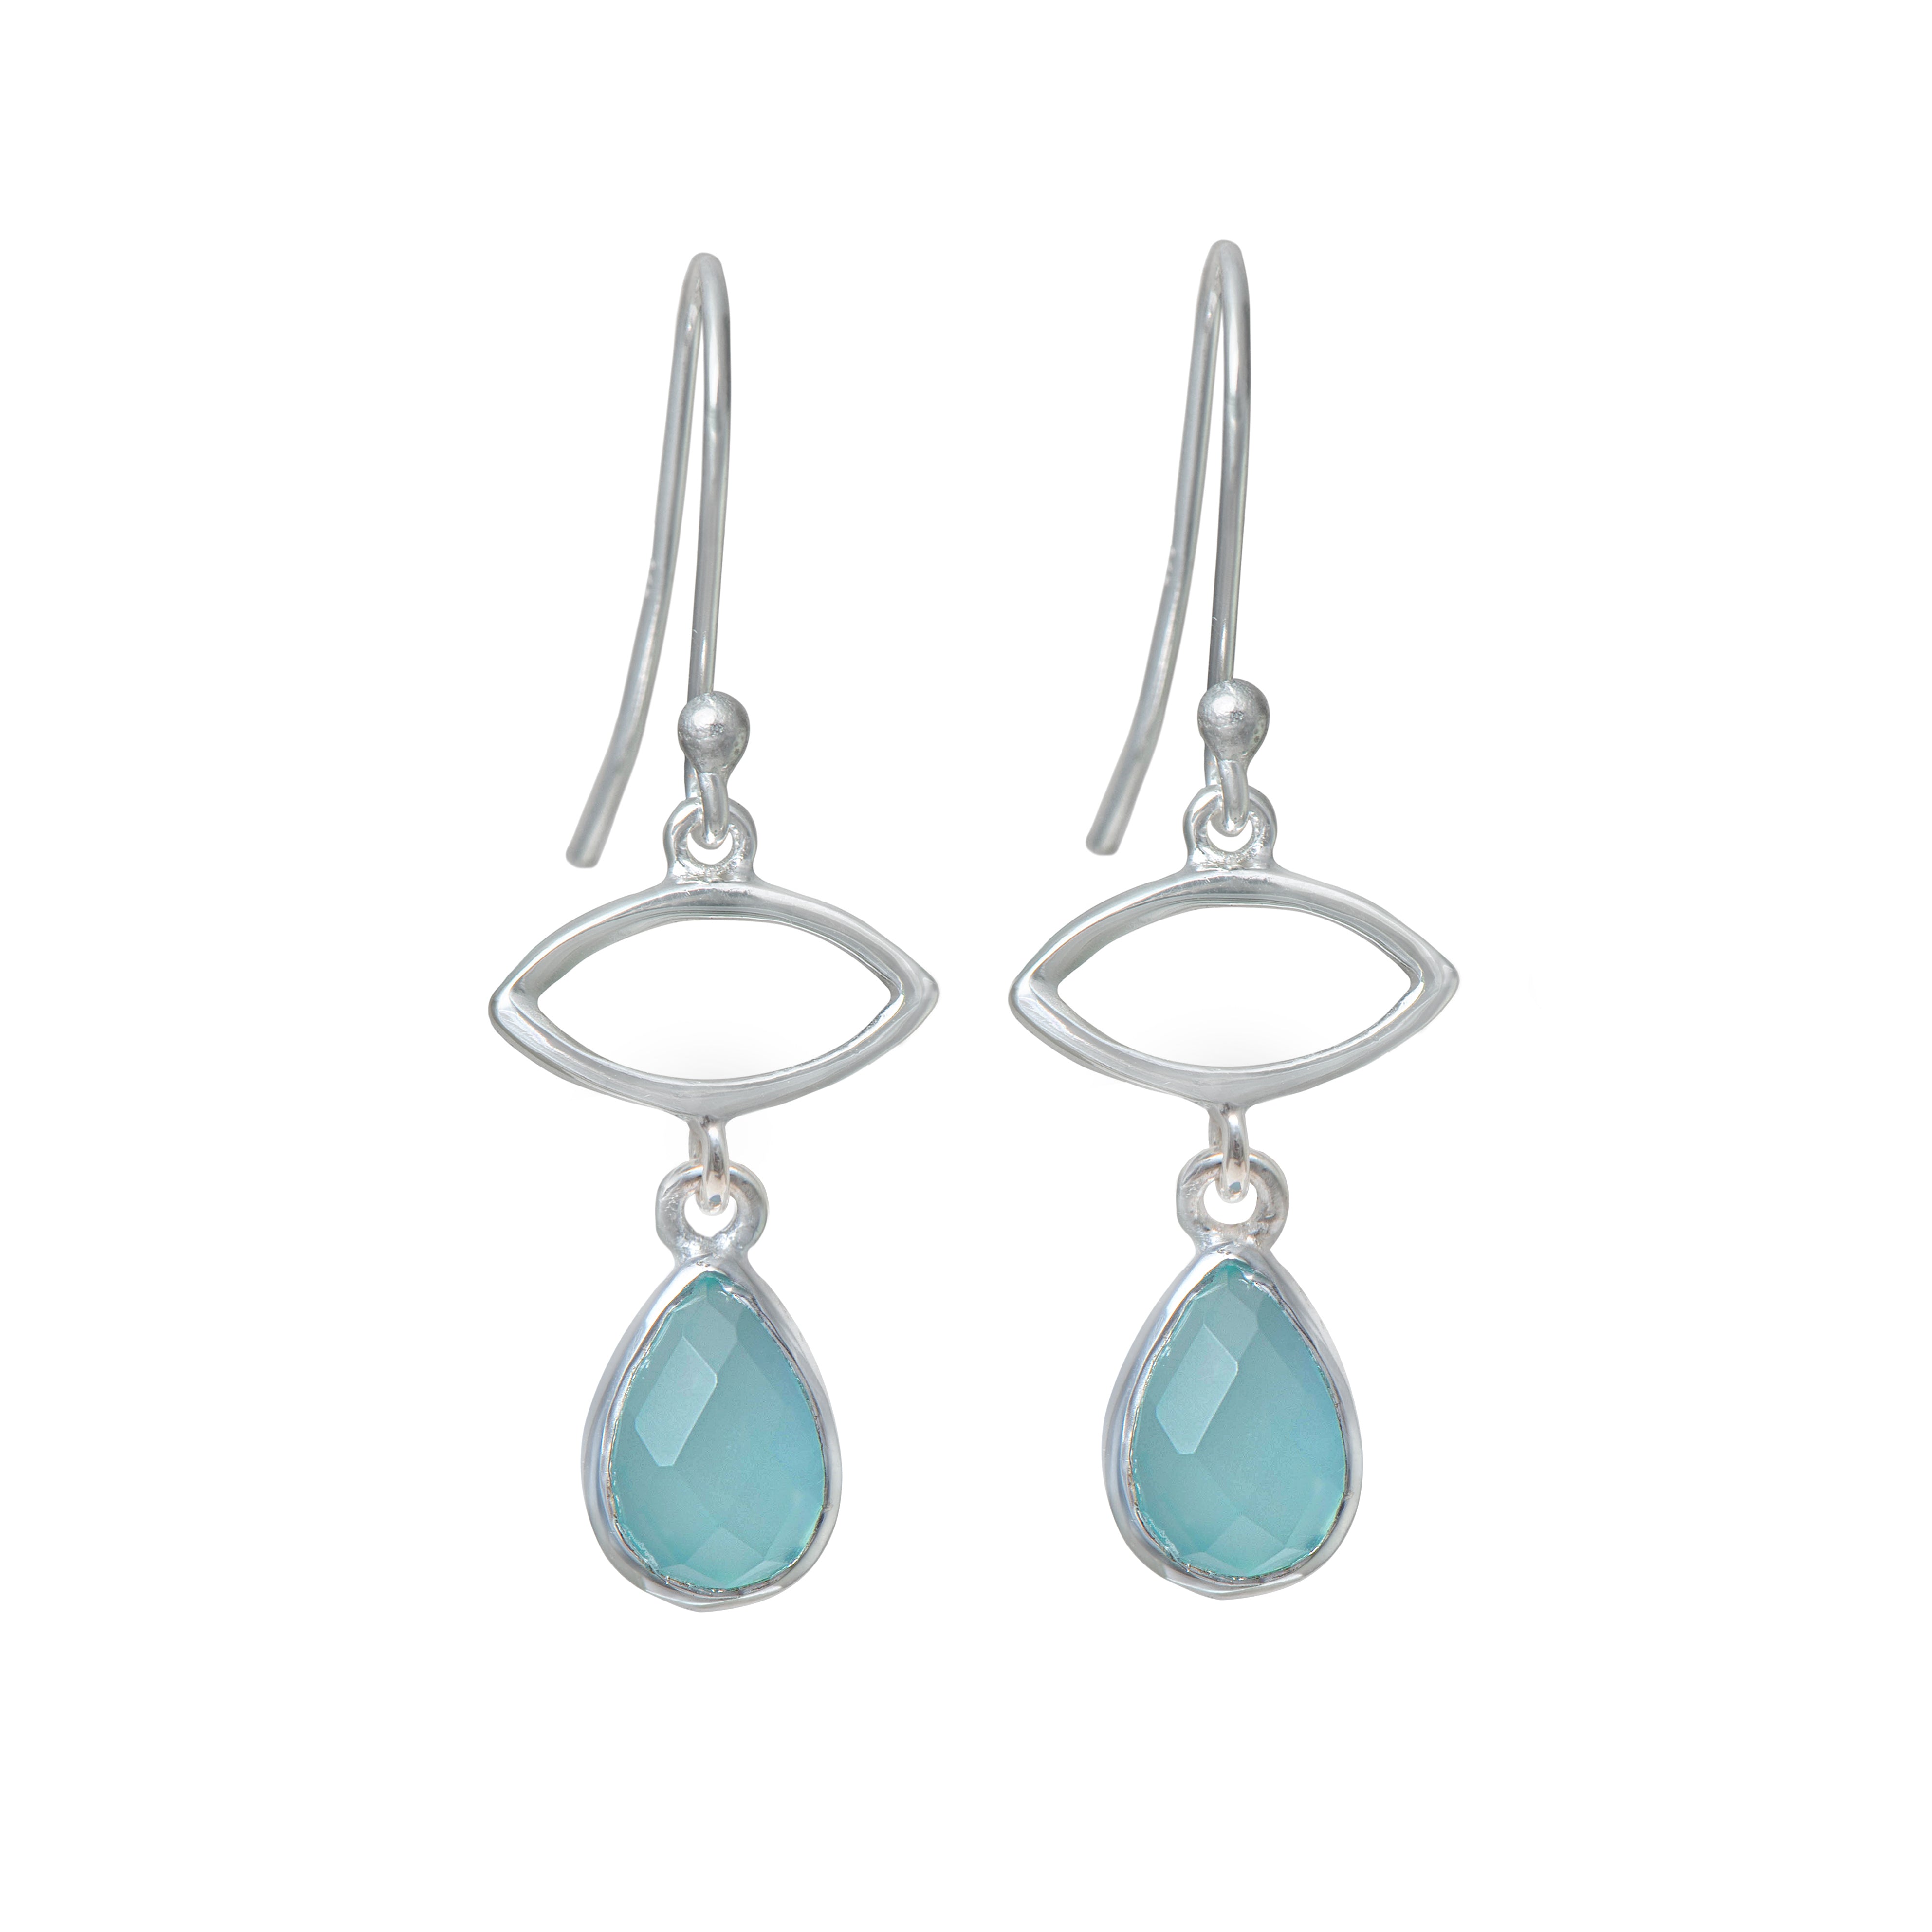 Silver Drop Earrings with Aqua Chalcedony Gemstone